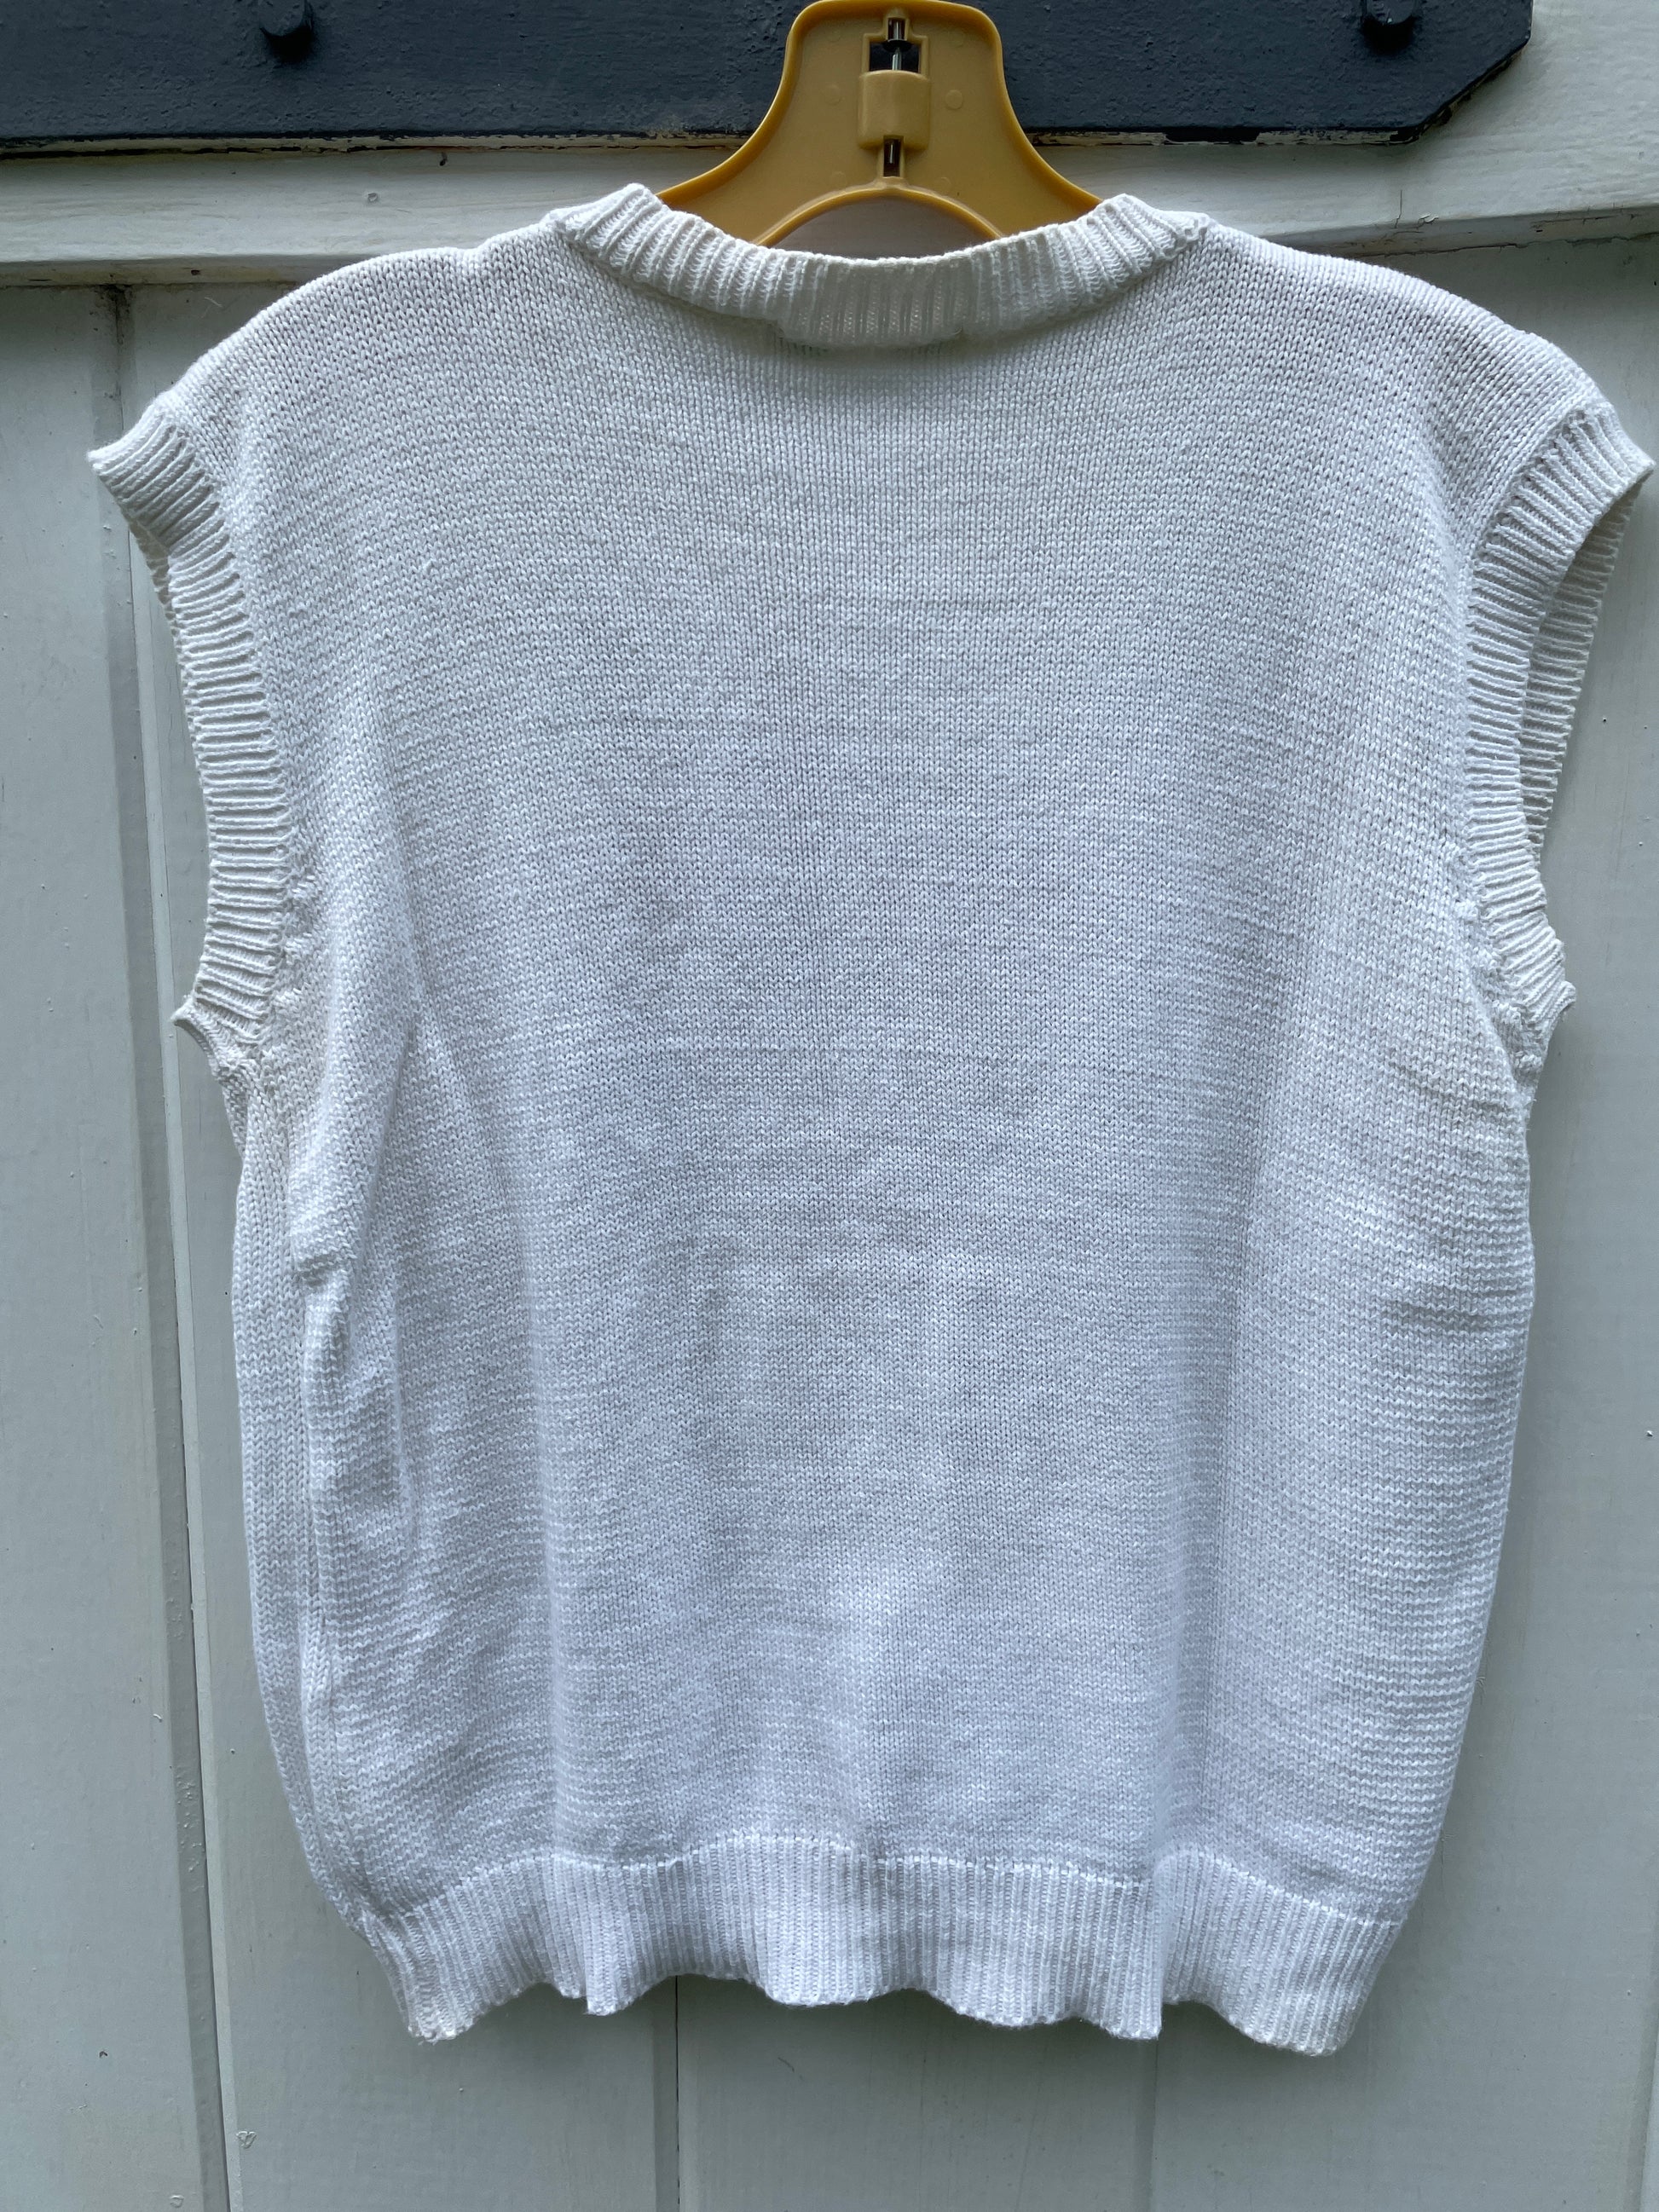  70s Mariea Kim Handmade Wool Blend Knit Vest Top